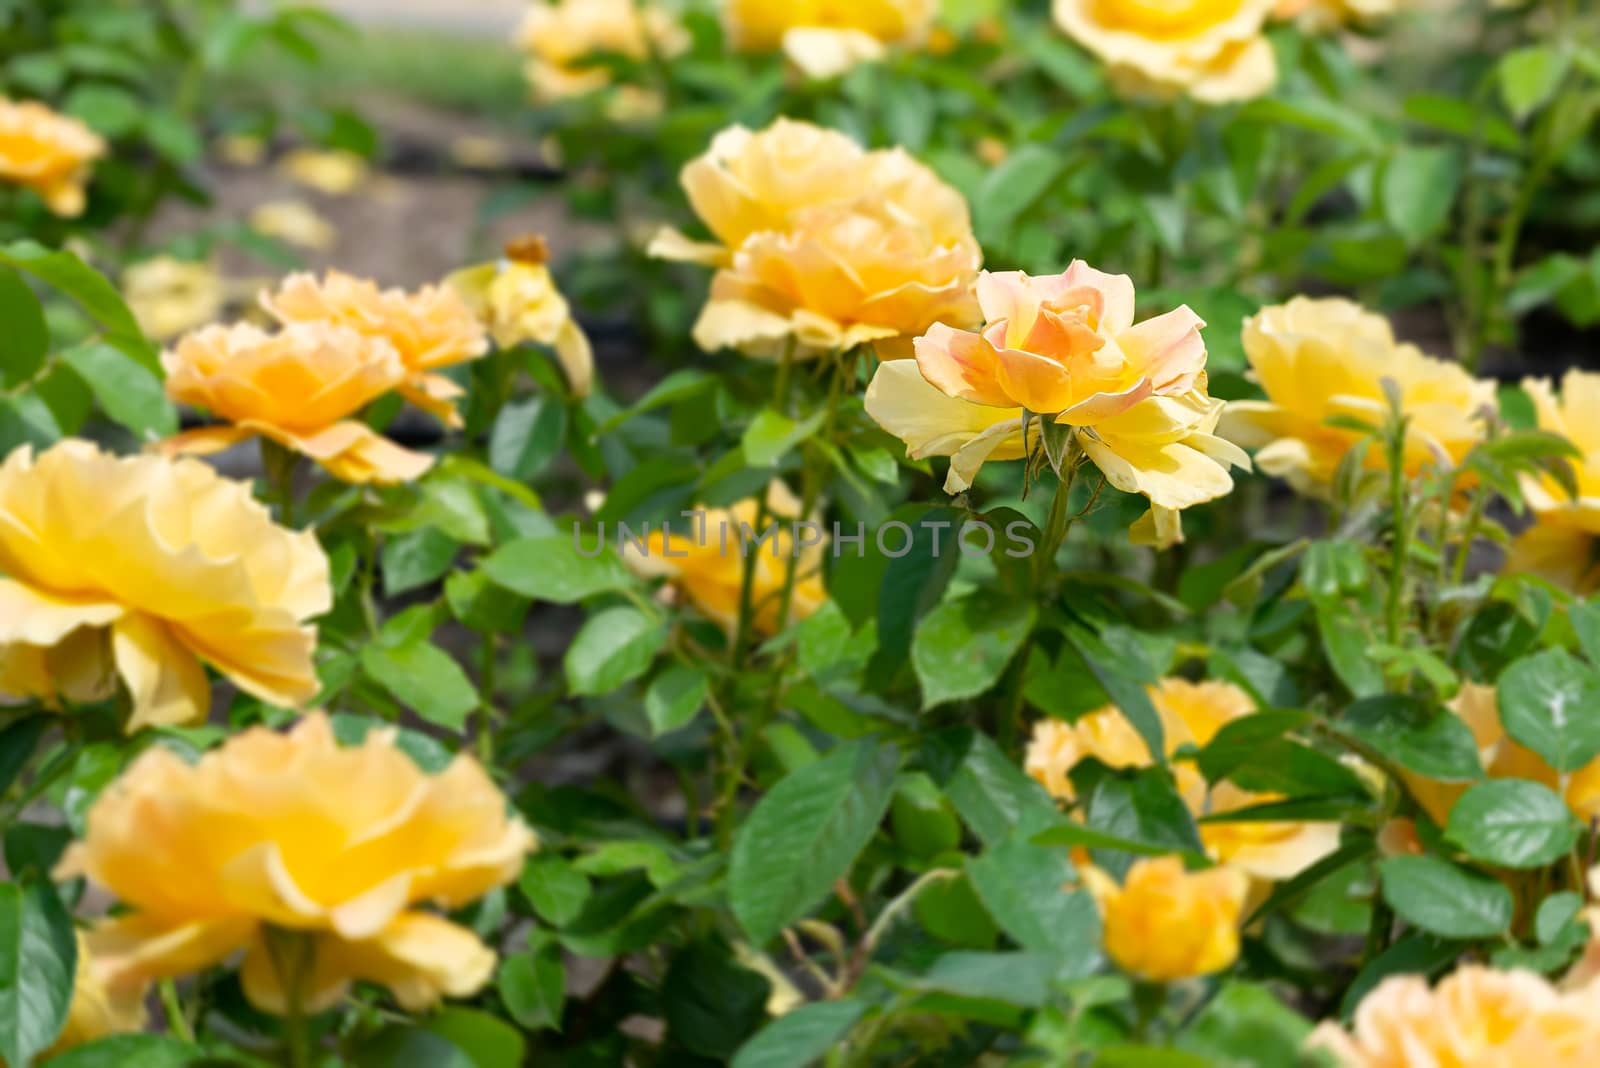 Yellow roses in a garden by MaxalTamor